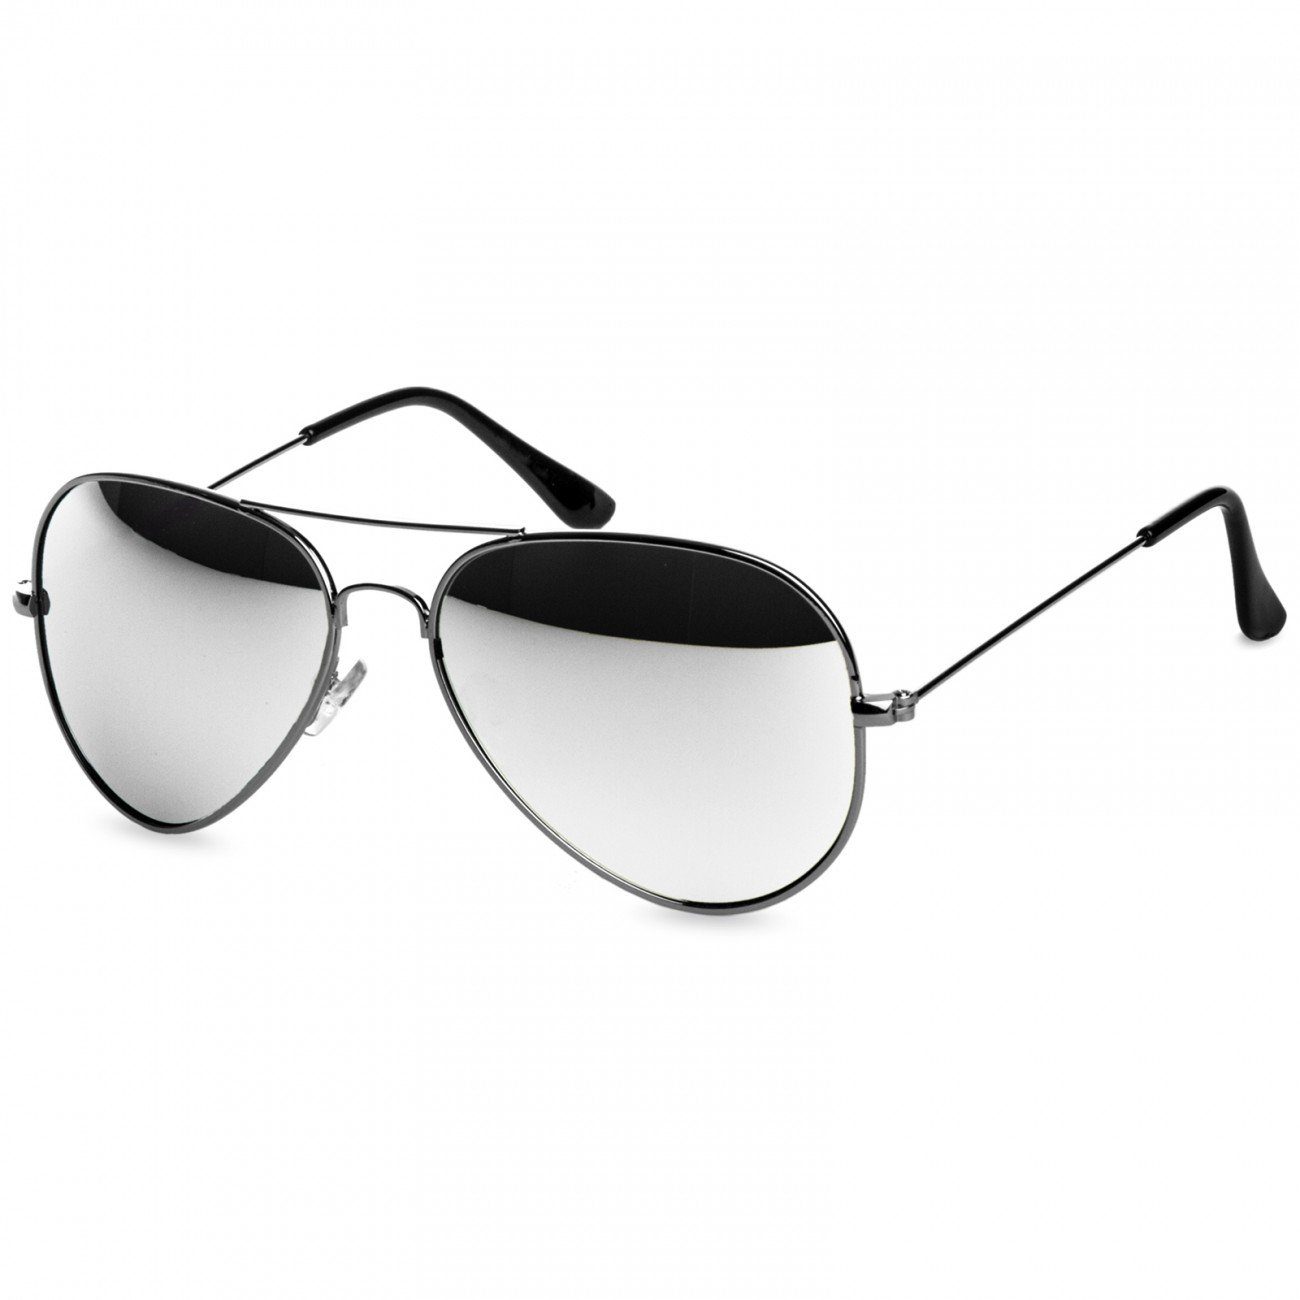 Caspar Sonnenbrille SG032 klassische Retro Design Pilotenbrille